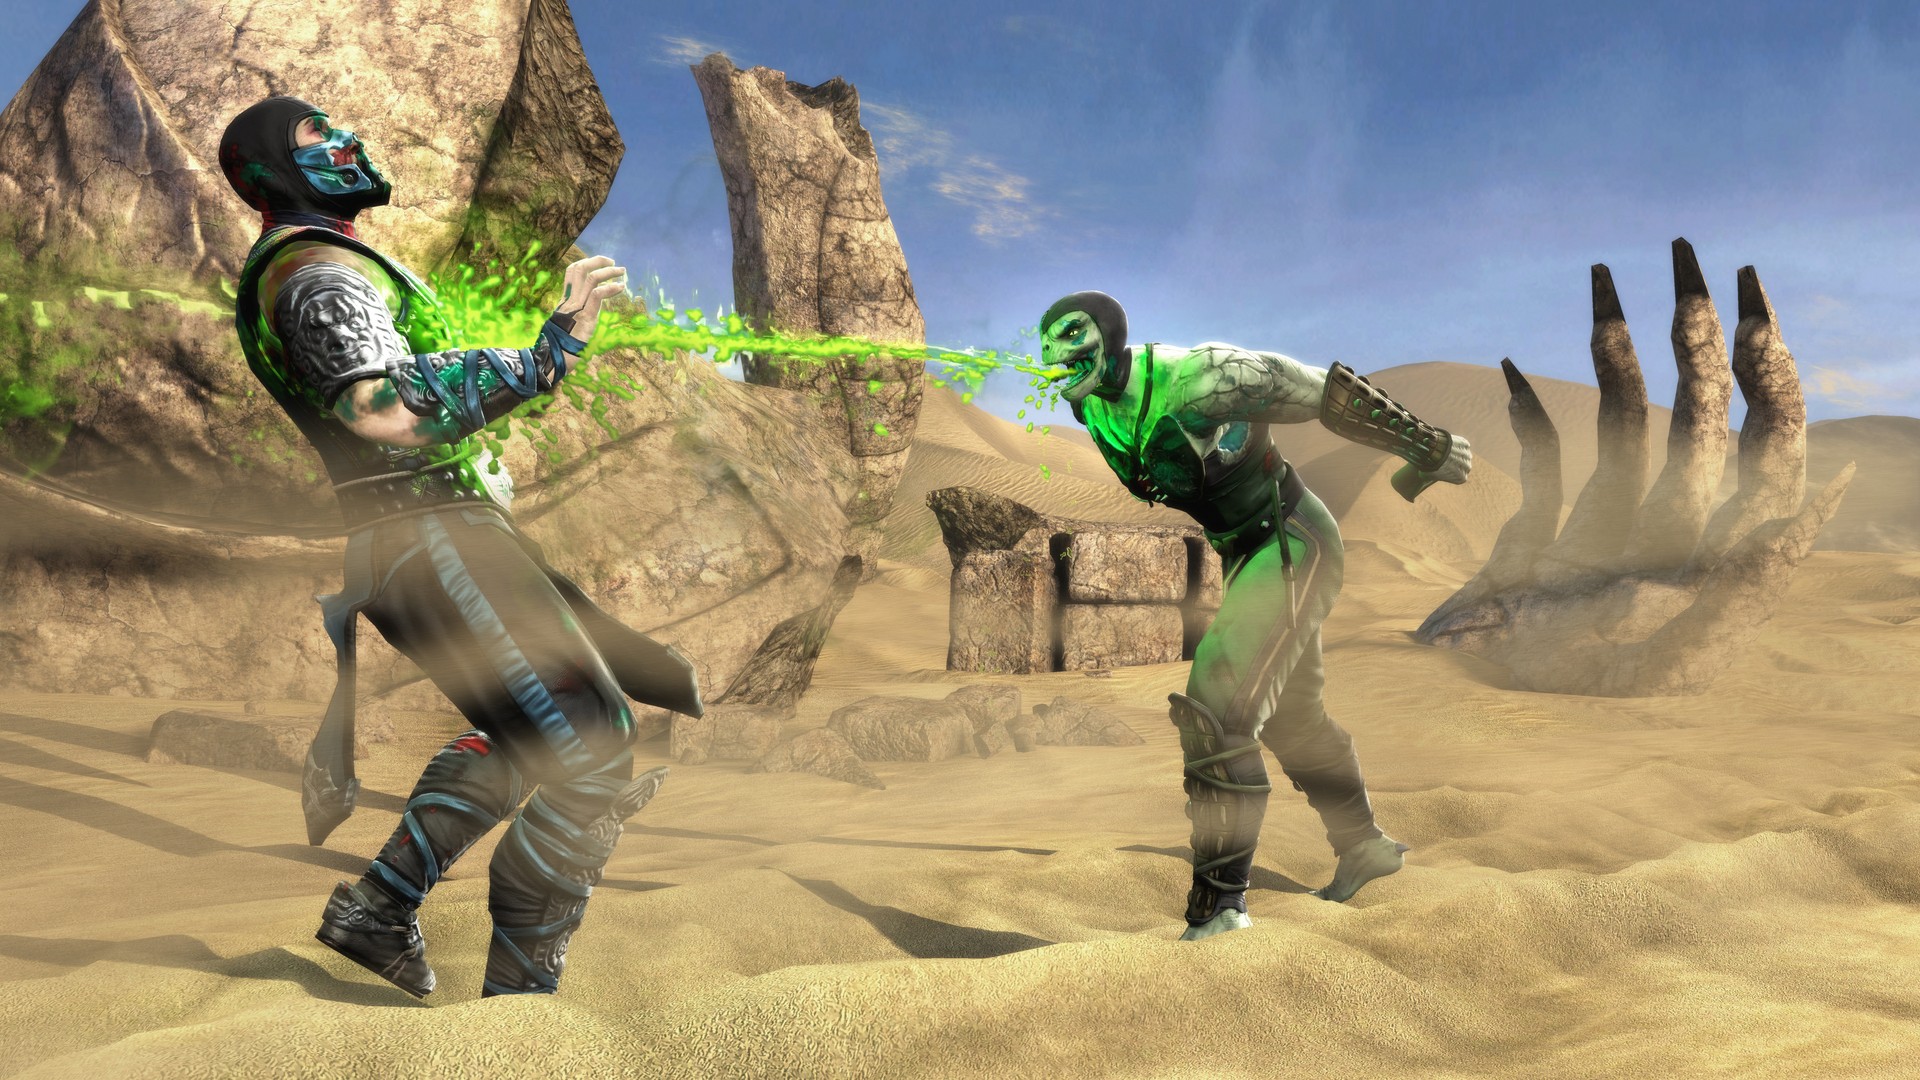 Mortal Kombat Ninjas wallpaper by TG133 - 15 - Free on ZEDGE™